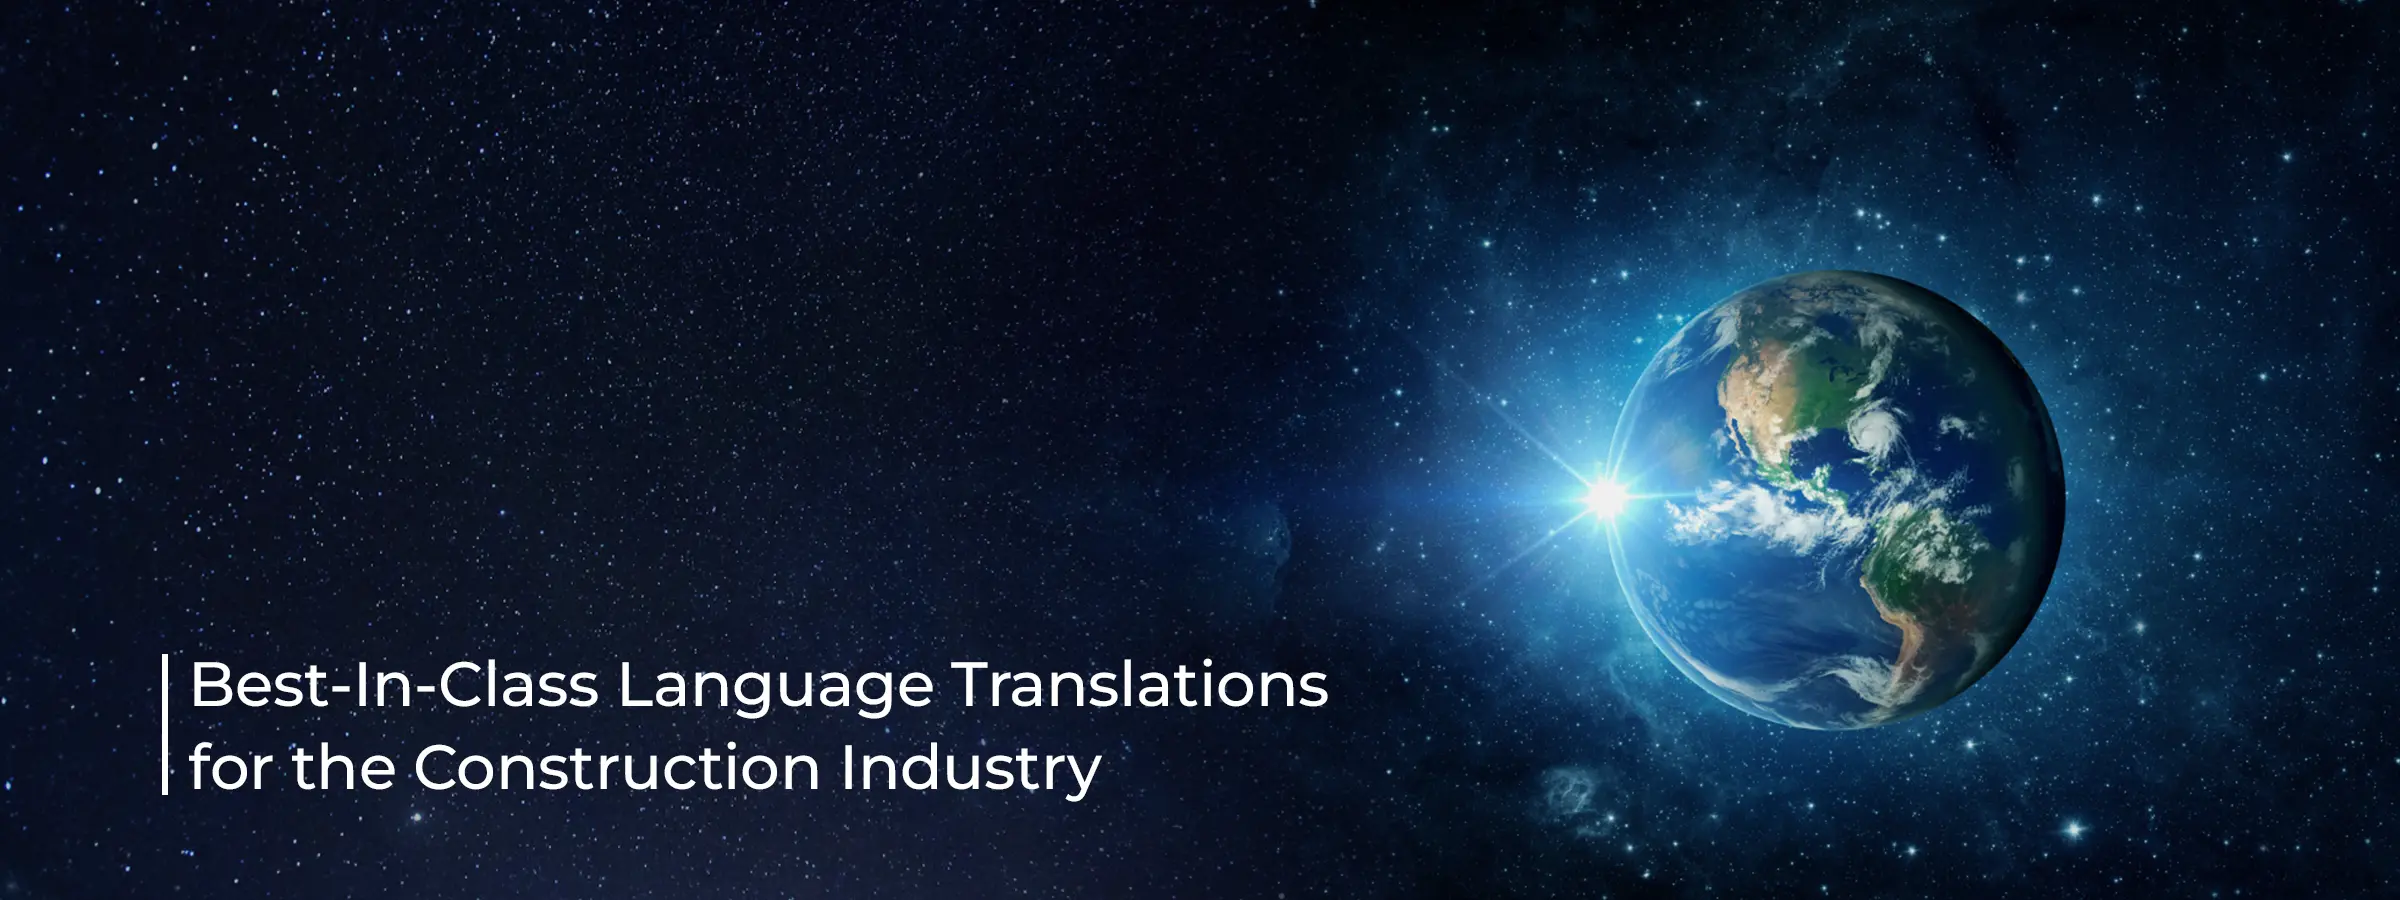 language-translation-for-construction-industry